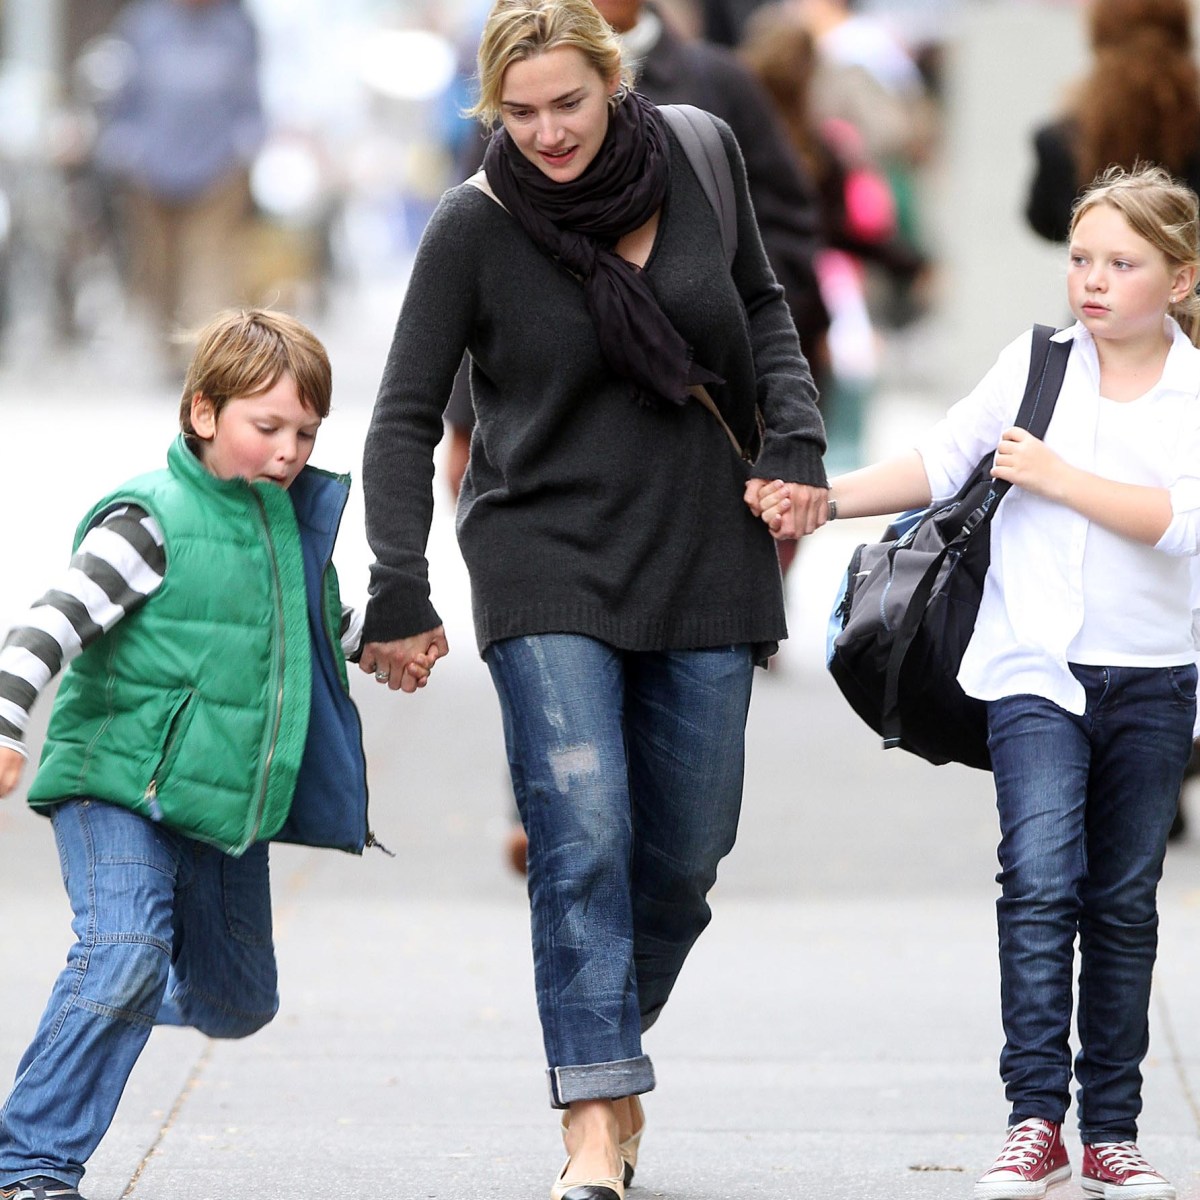 Kate Winslet Has 3 Kids From 3 Husbands Meet Mia Joe And Bear Edward abel ned rocknroll smith. https www closerweekly com posts kate winslet has 3 kids from 3 husbands meet mia joe and bear